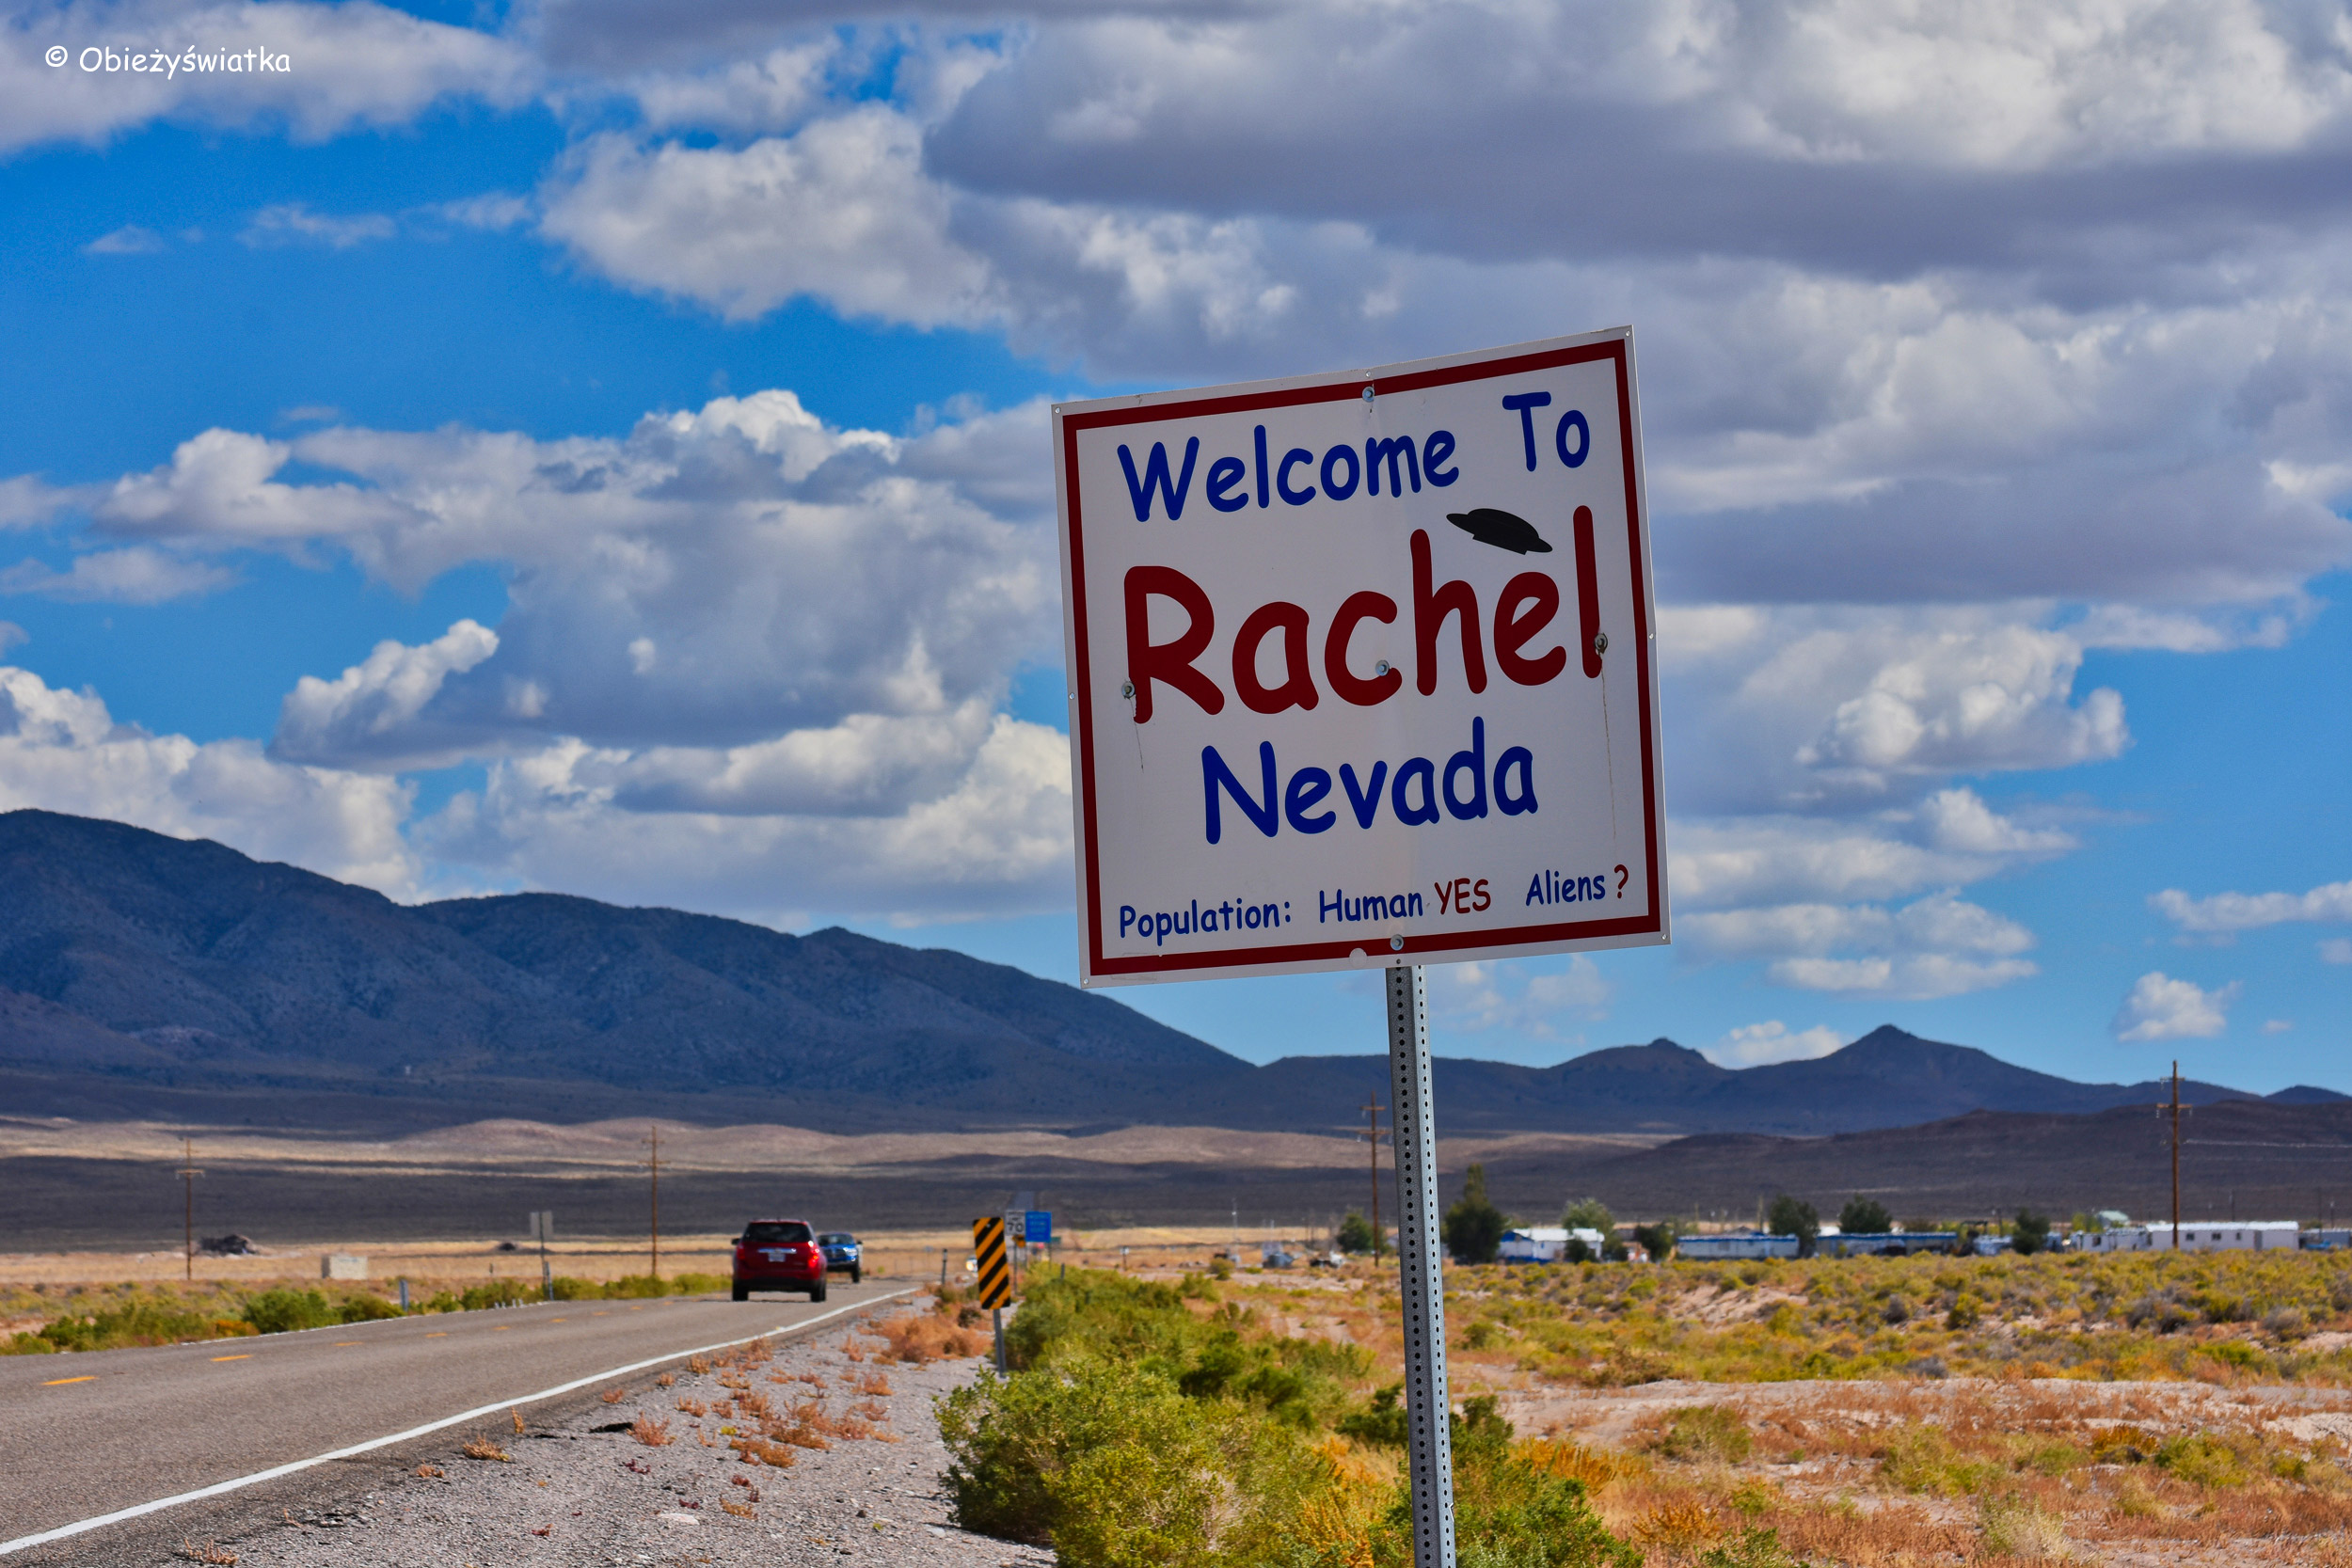 Welcome to Rachel, Nevada :)